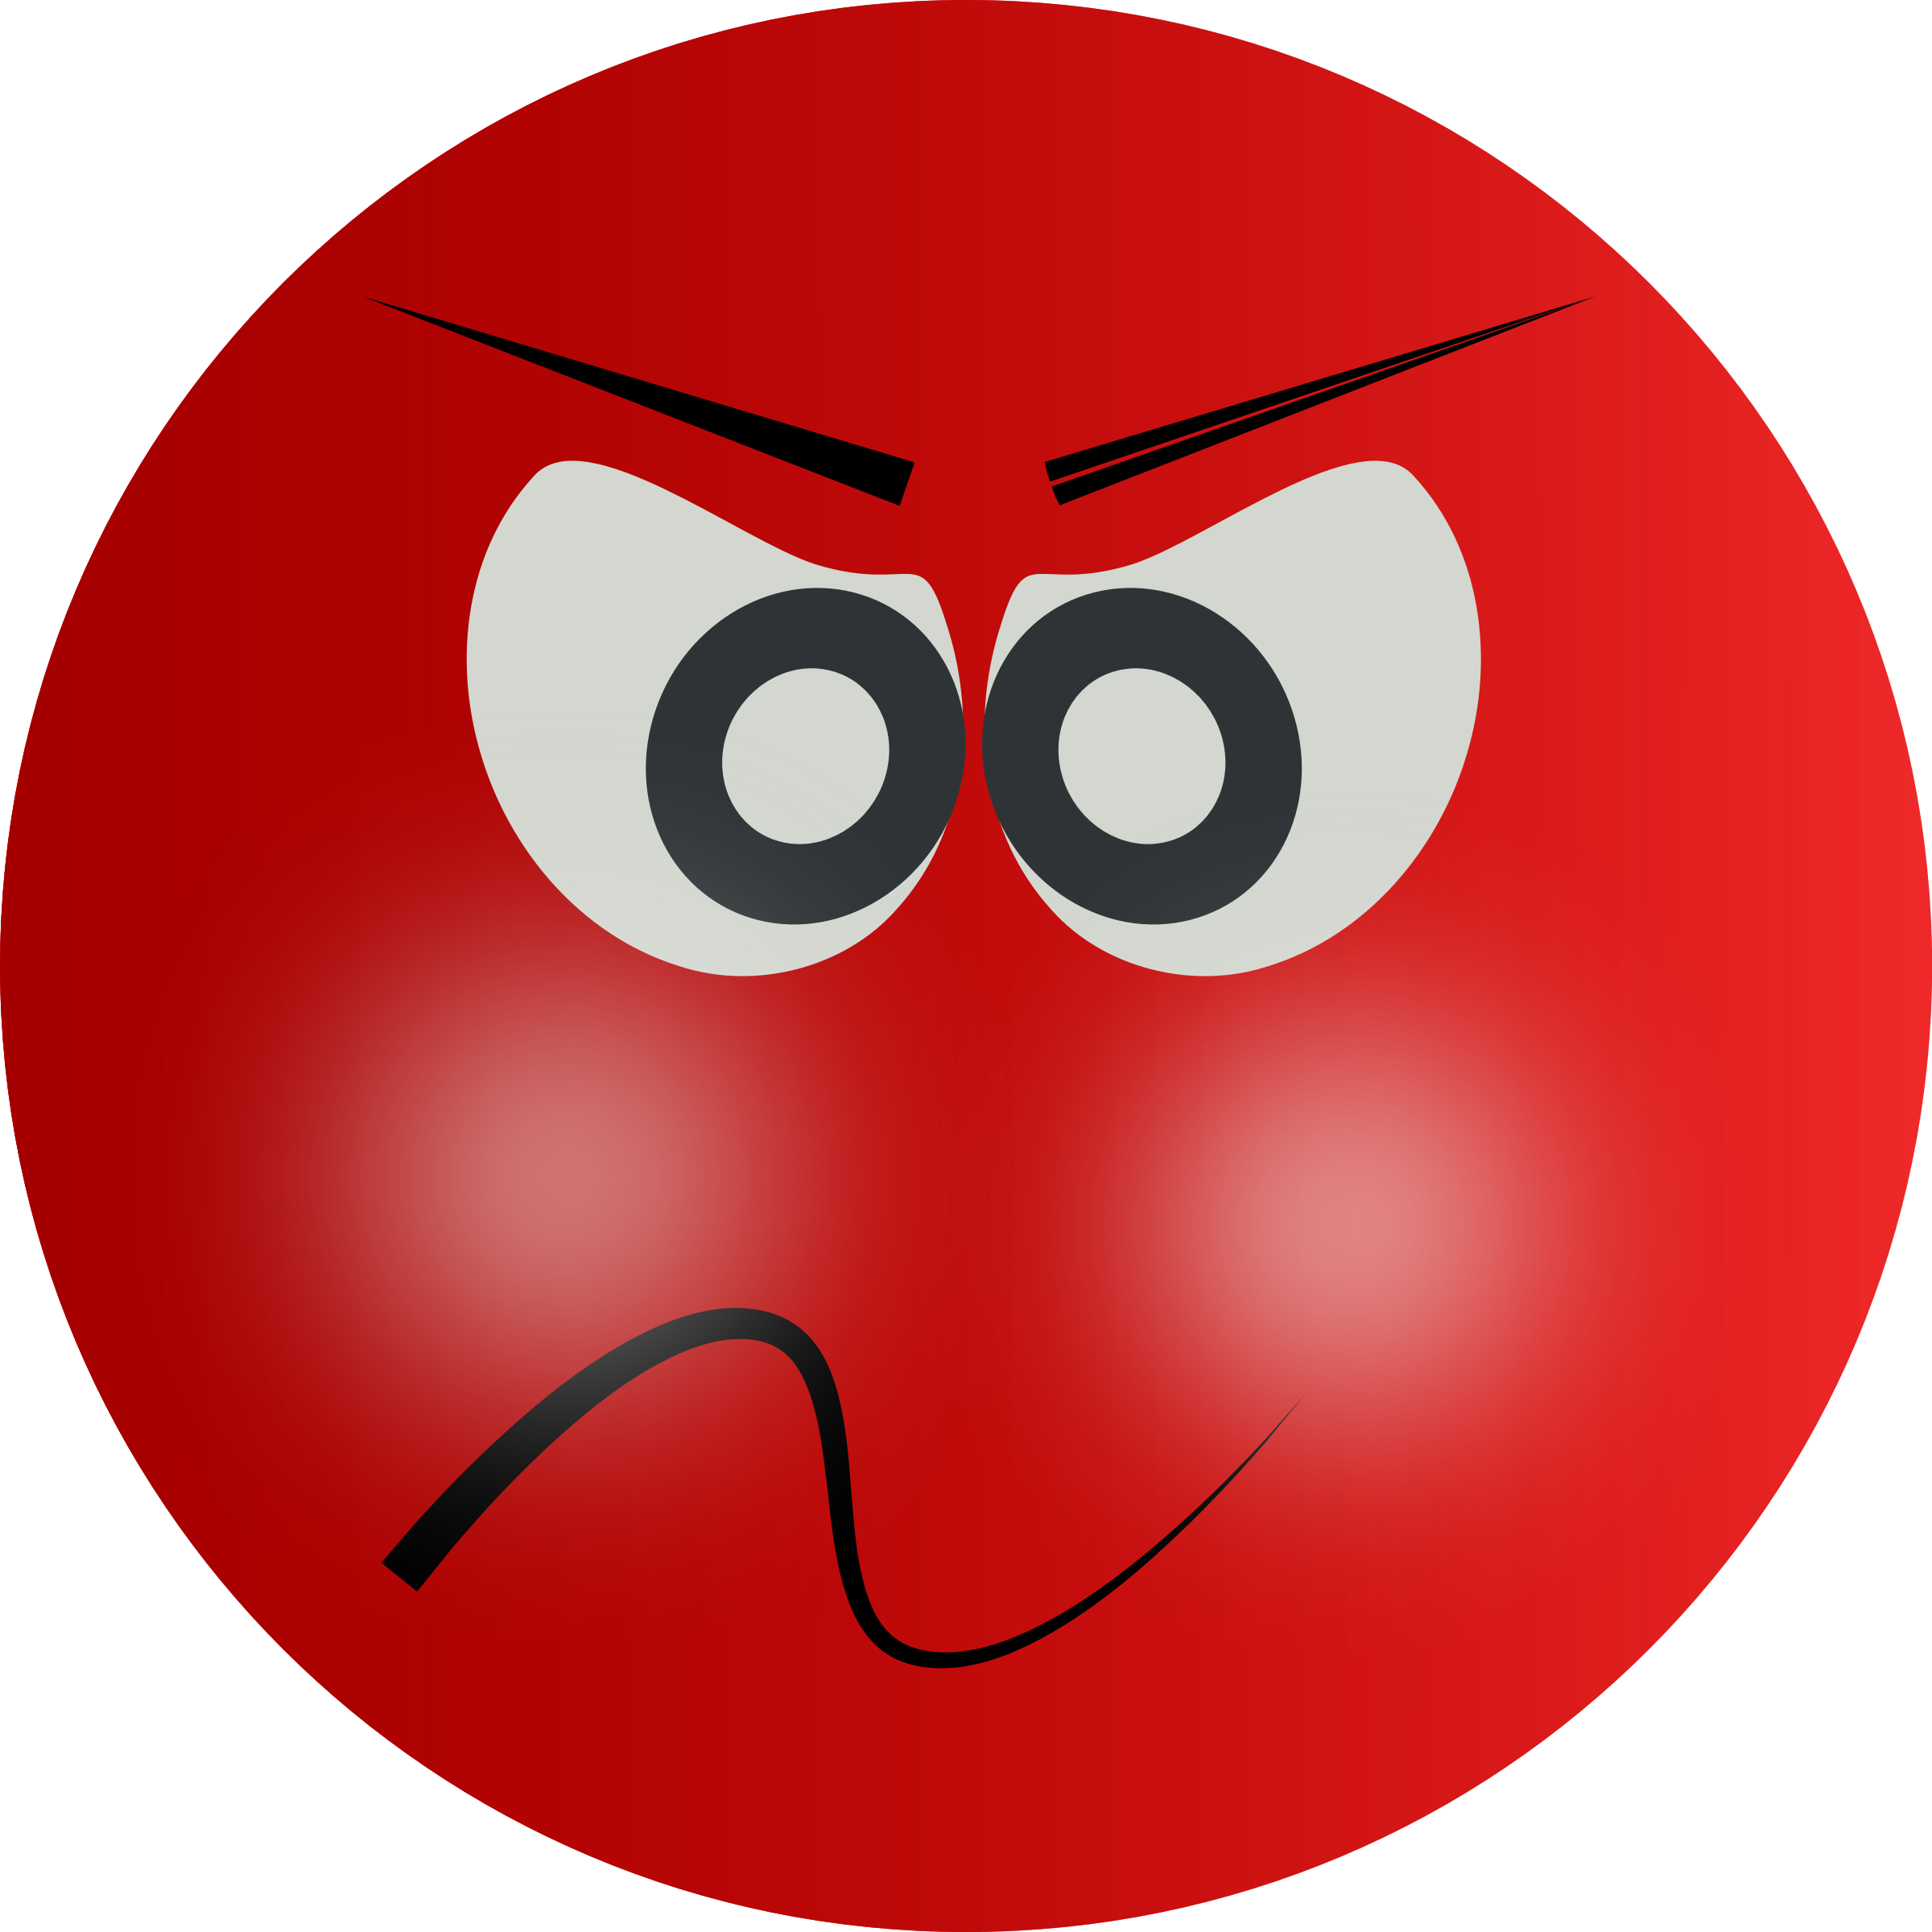 Red Angry Crying Emoji Free PNG Image | PNG Arts